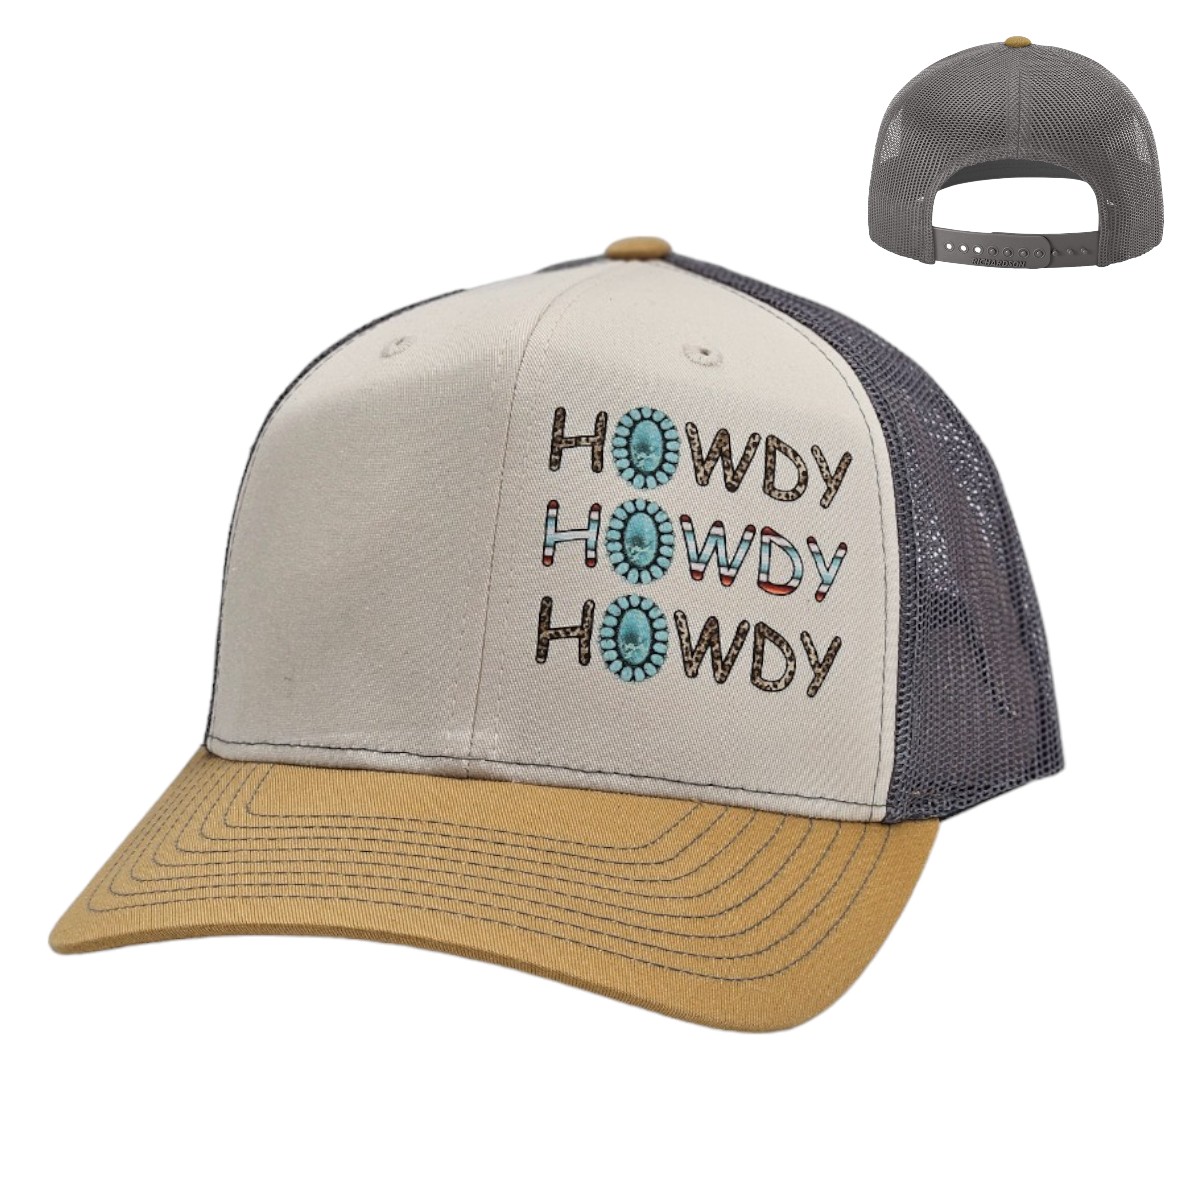 RC-CAP-HOWDY-MK